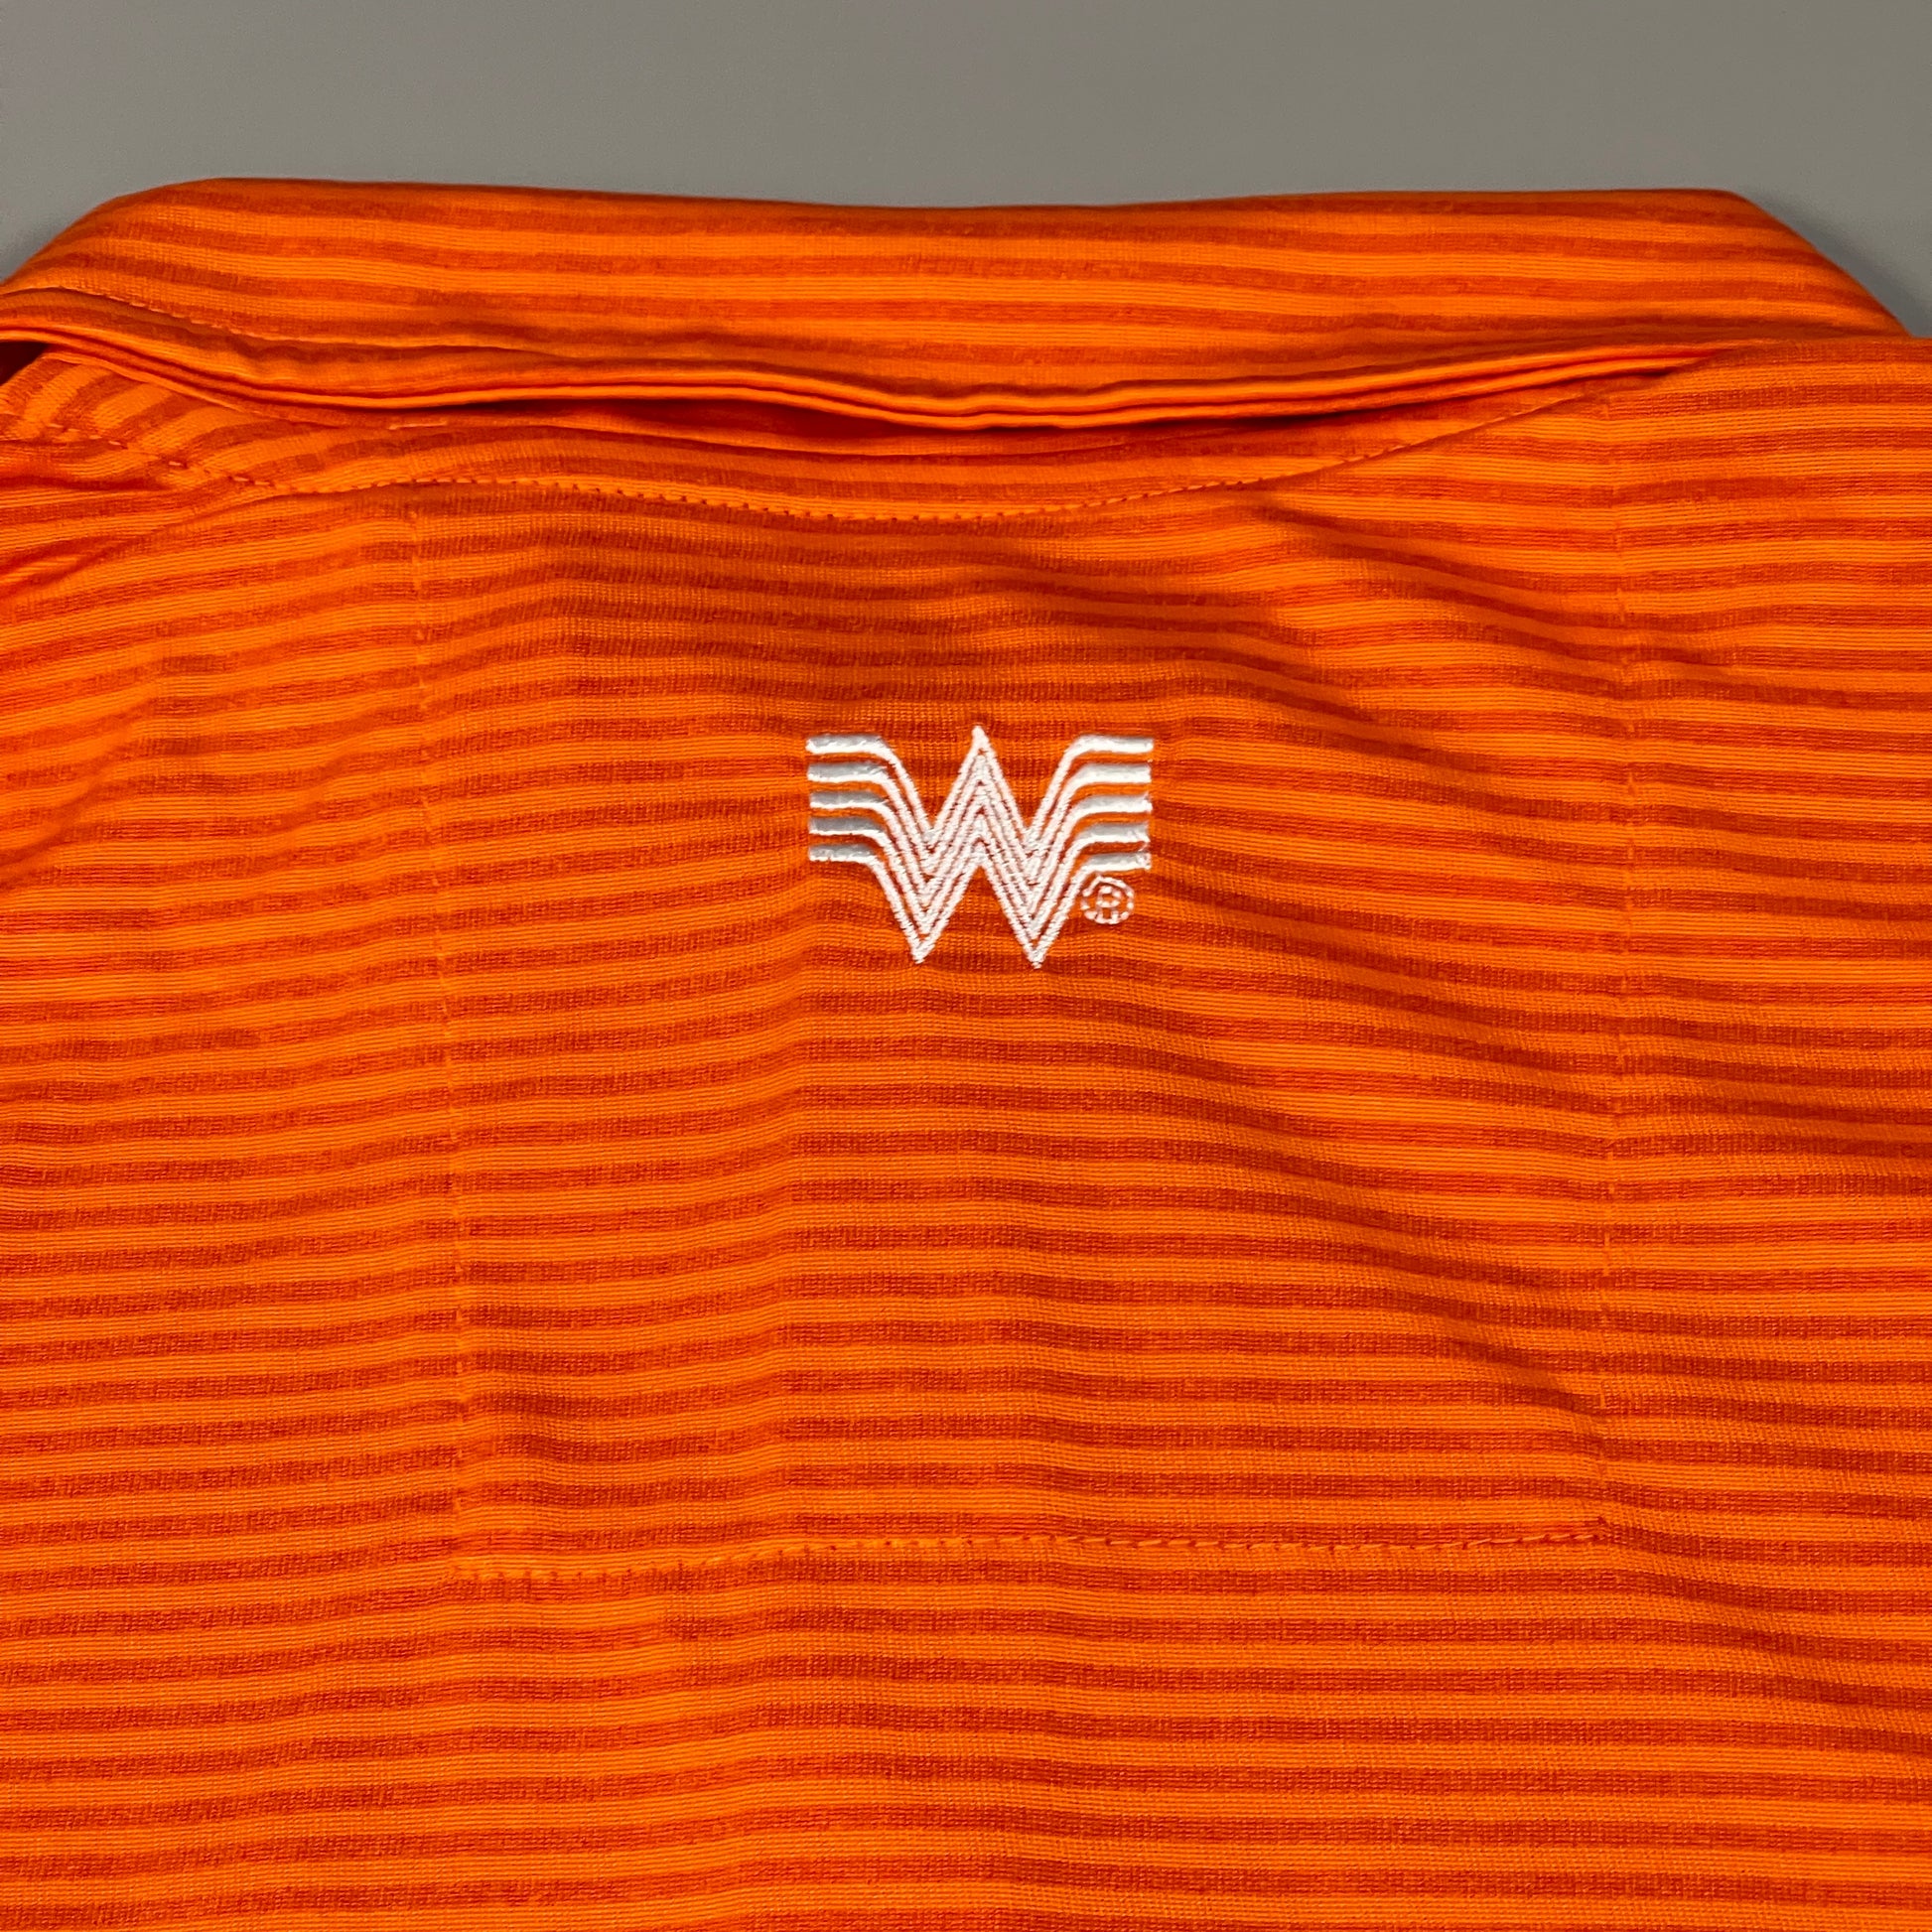 🍔 Whataburger Employee Uniform Orange Polo Work Shirt Men's